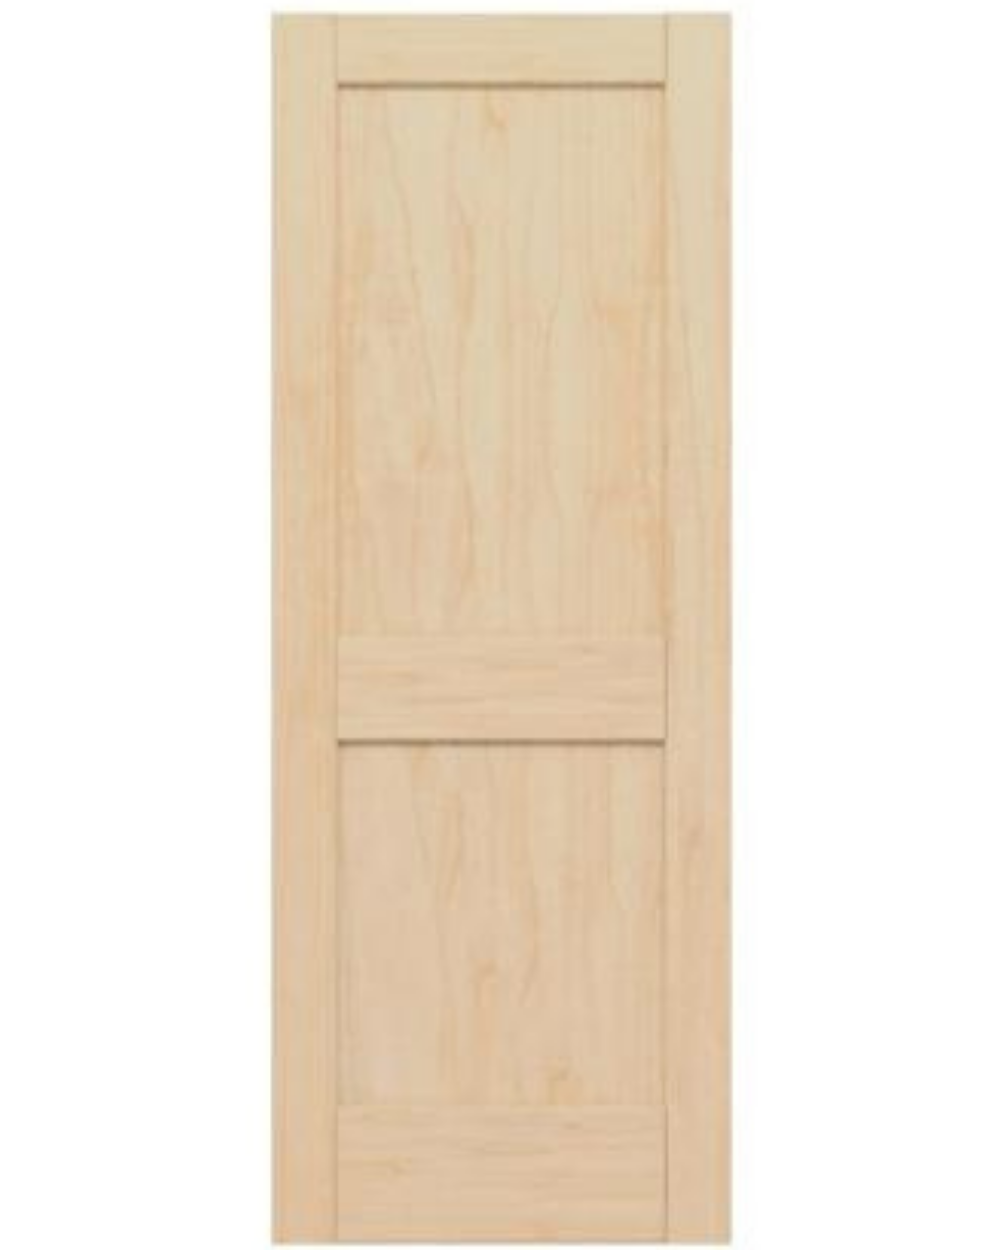 2 Panel Shaker Style (Maple)